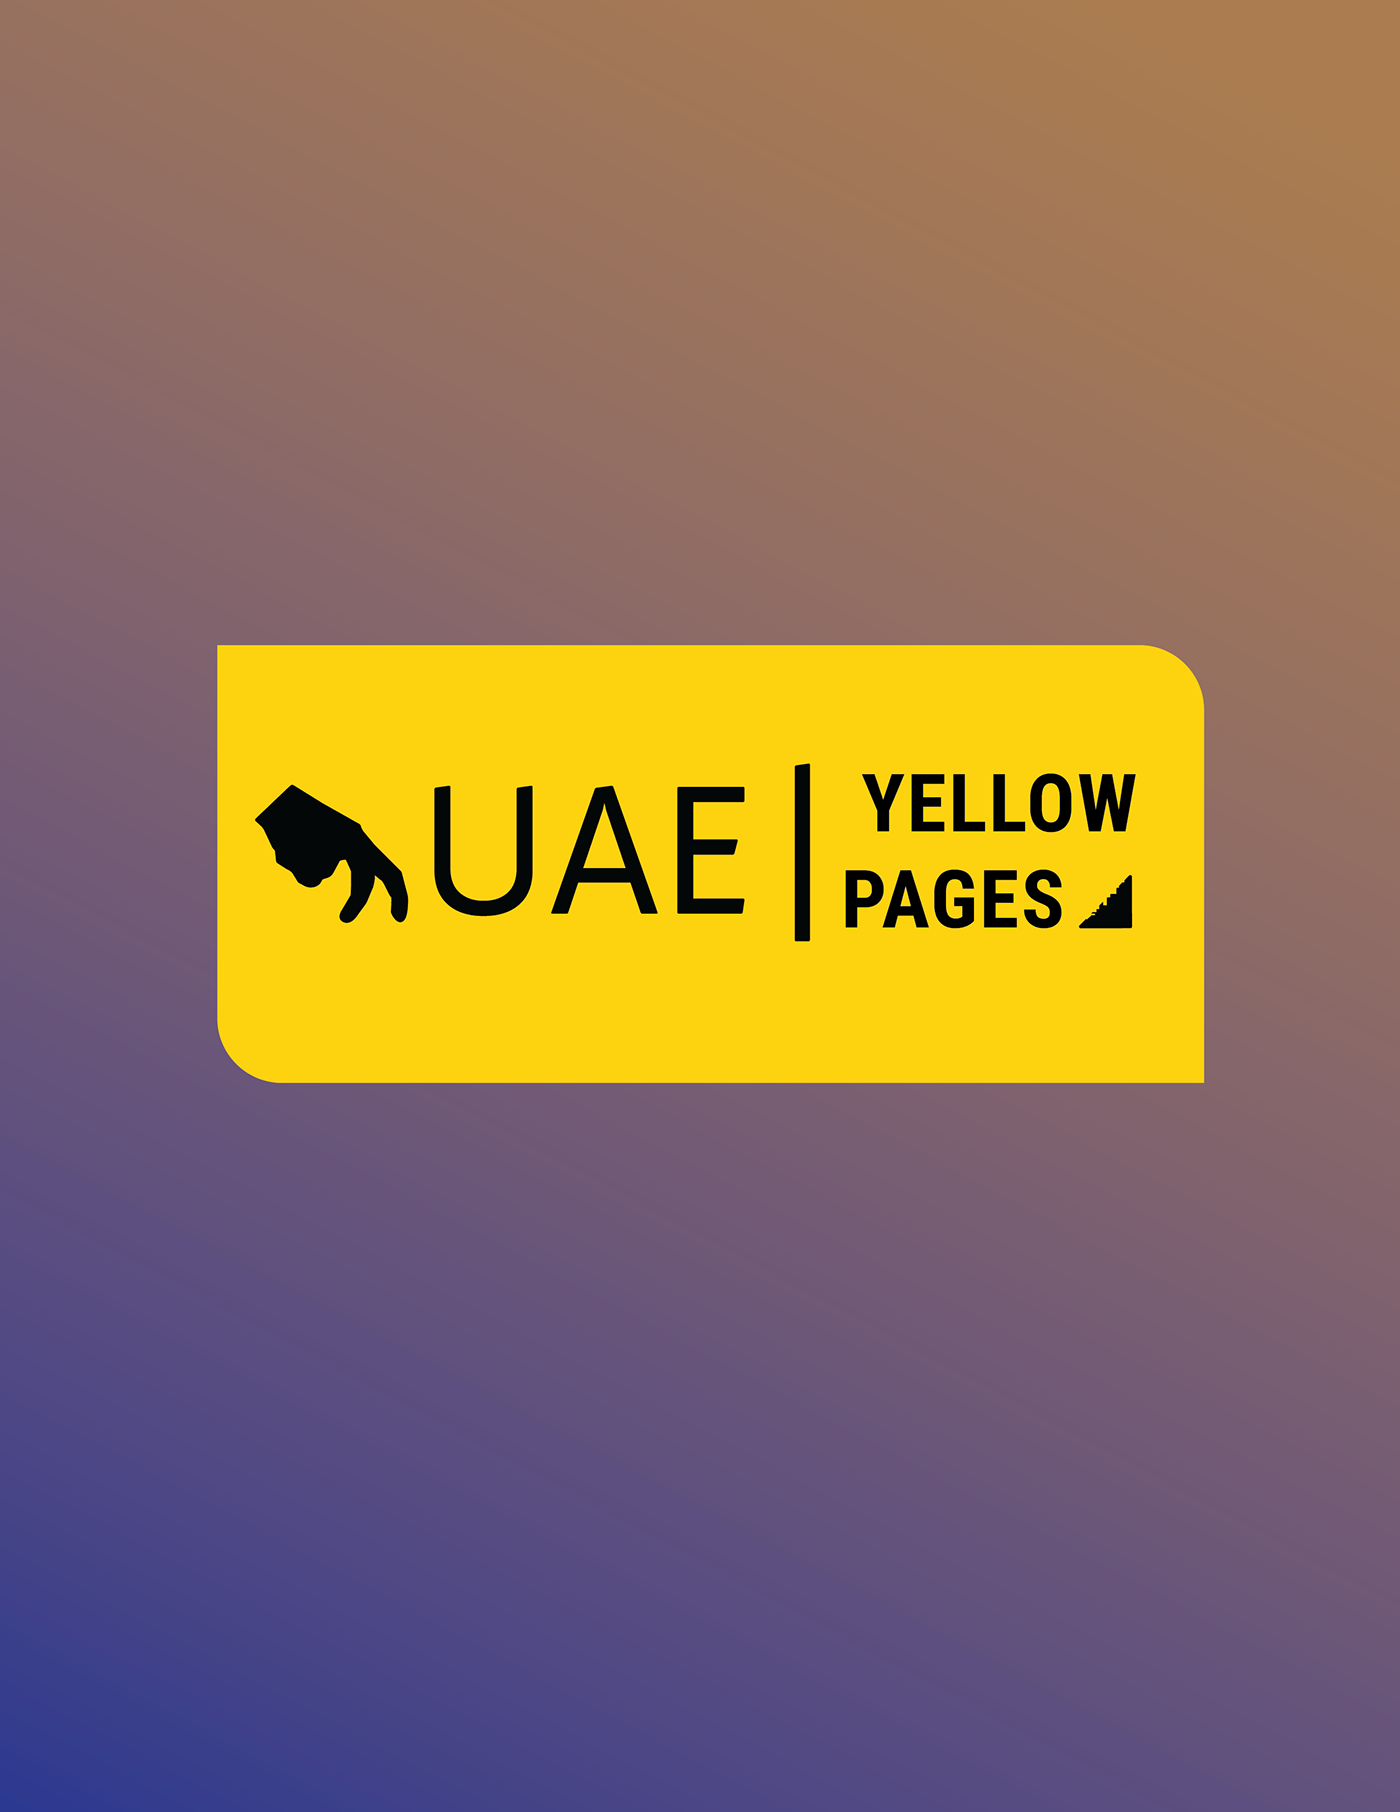 UAE Yellow Pages Prajawal Shrestha yellow pages adobe Illustrator